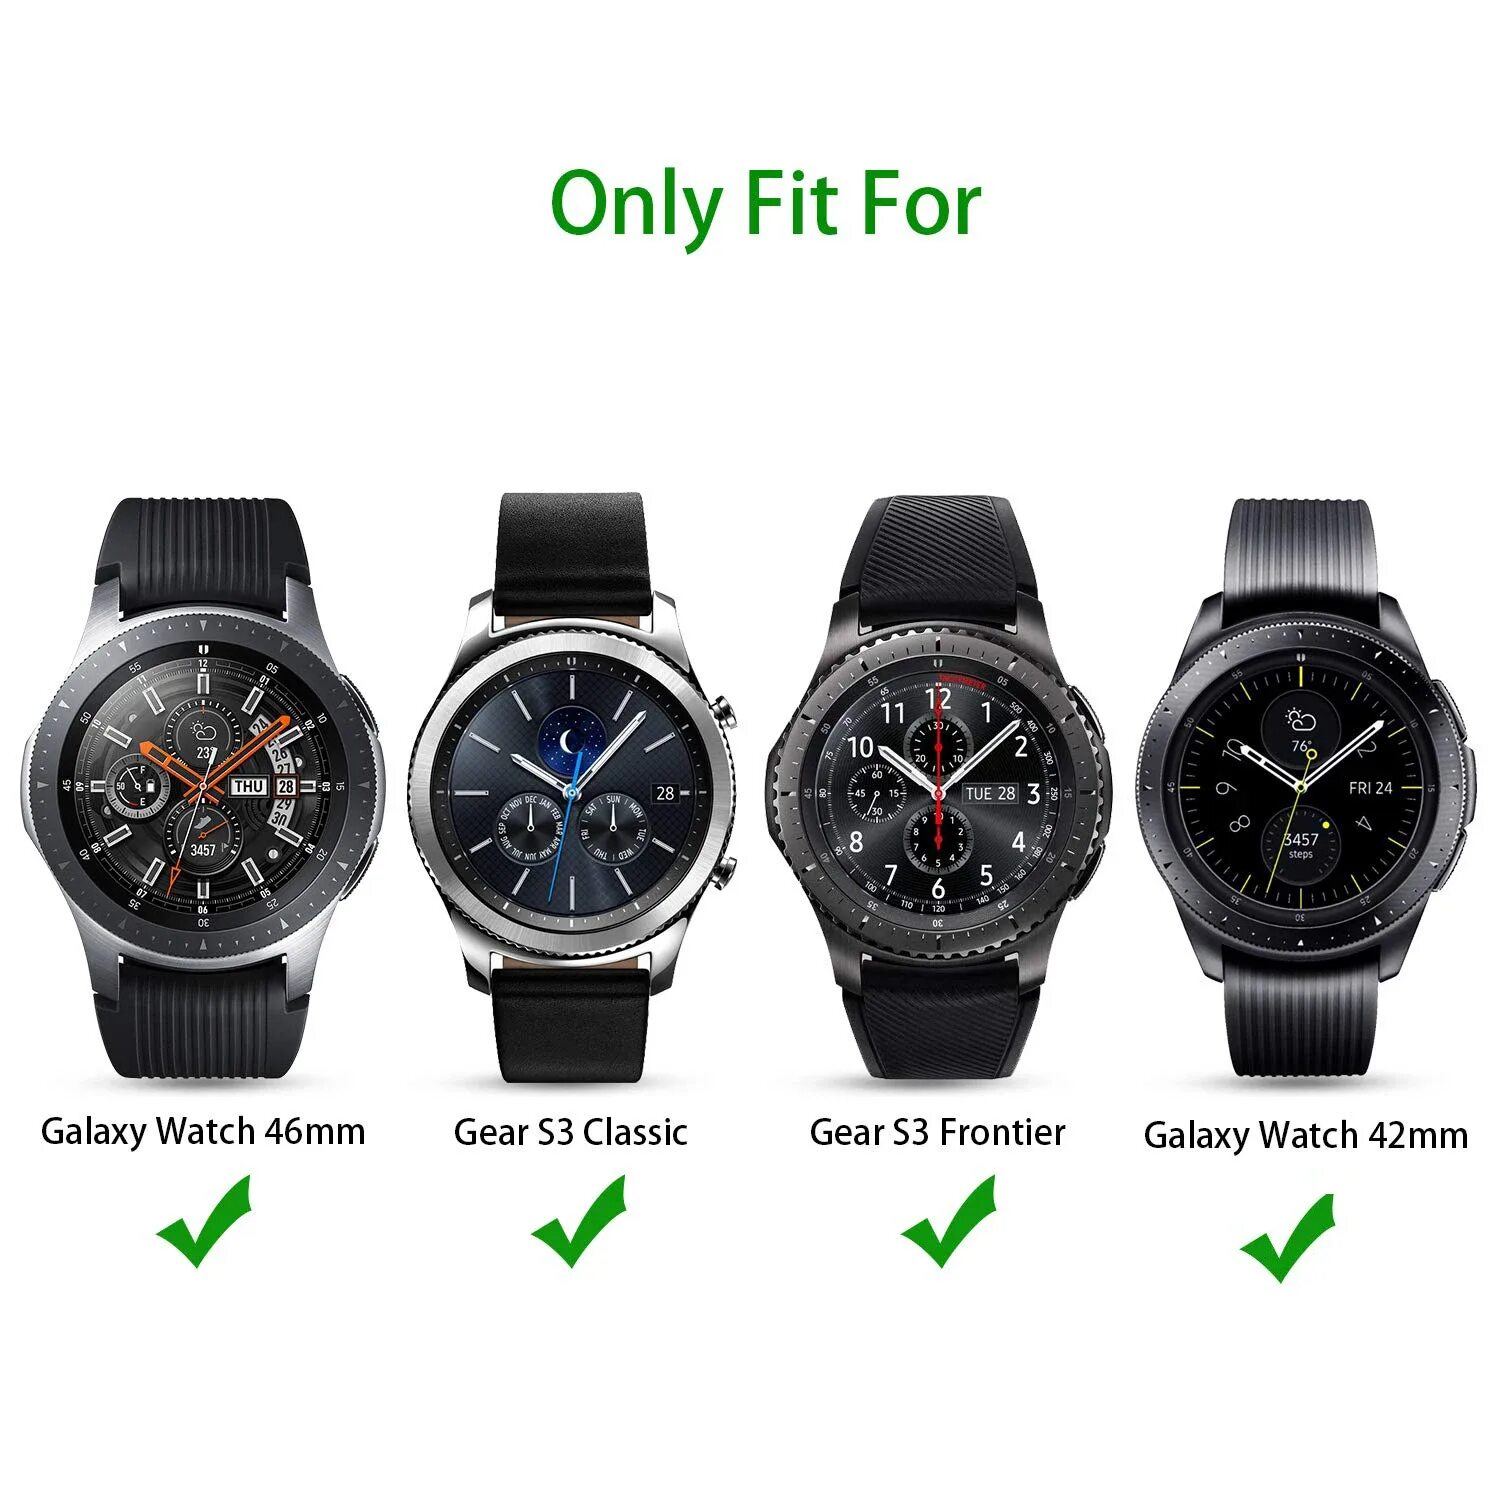 Samsung Galaxy watch Gear s3 Classic. Samsung Galaxy watch 46mm vs Gear s3. Samsung Galaxy watch 42мм. Samsung Galaxy watch 46mm. Часы самсунг сравнение